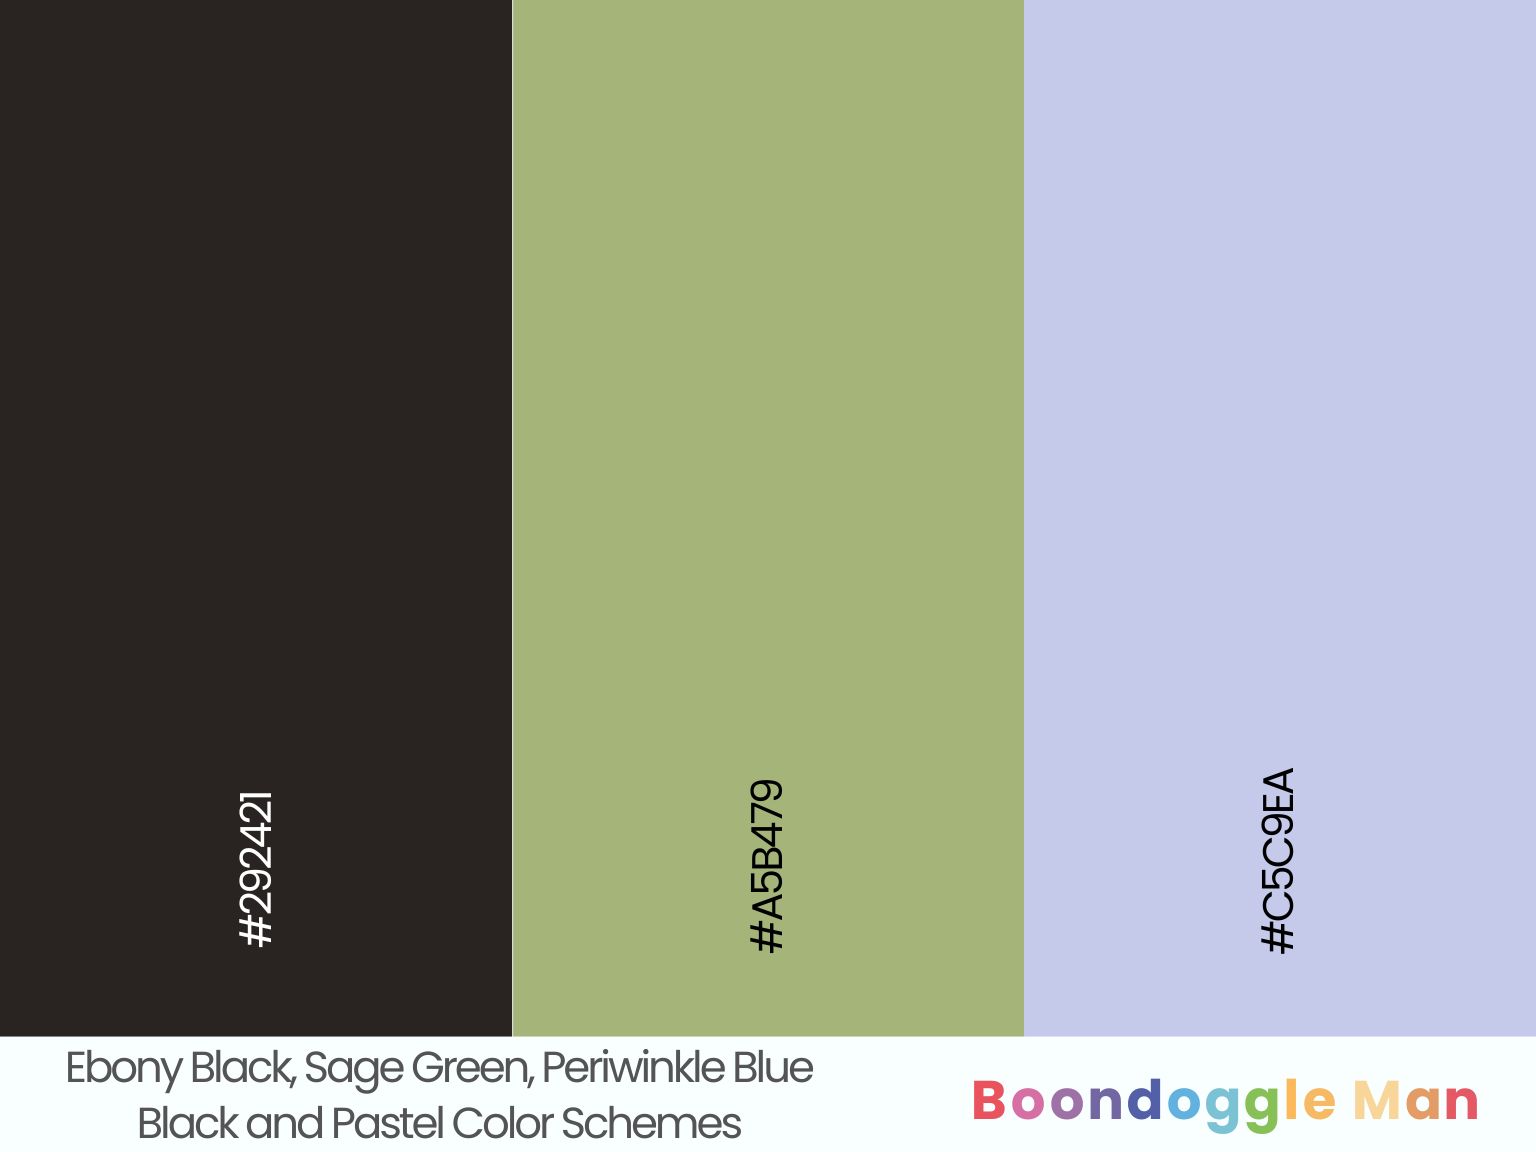 Ebony Black, Sage Green, Periwinkle Blue